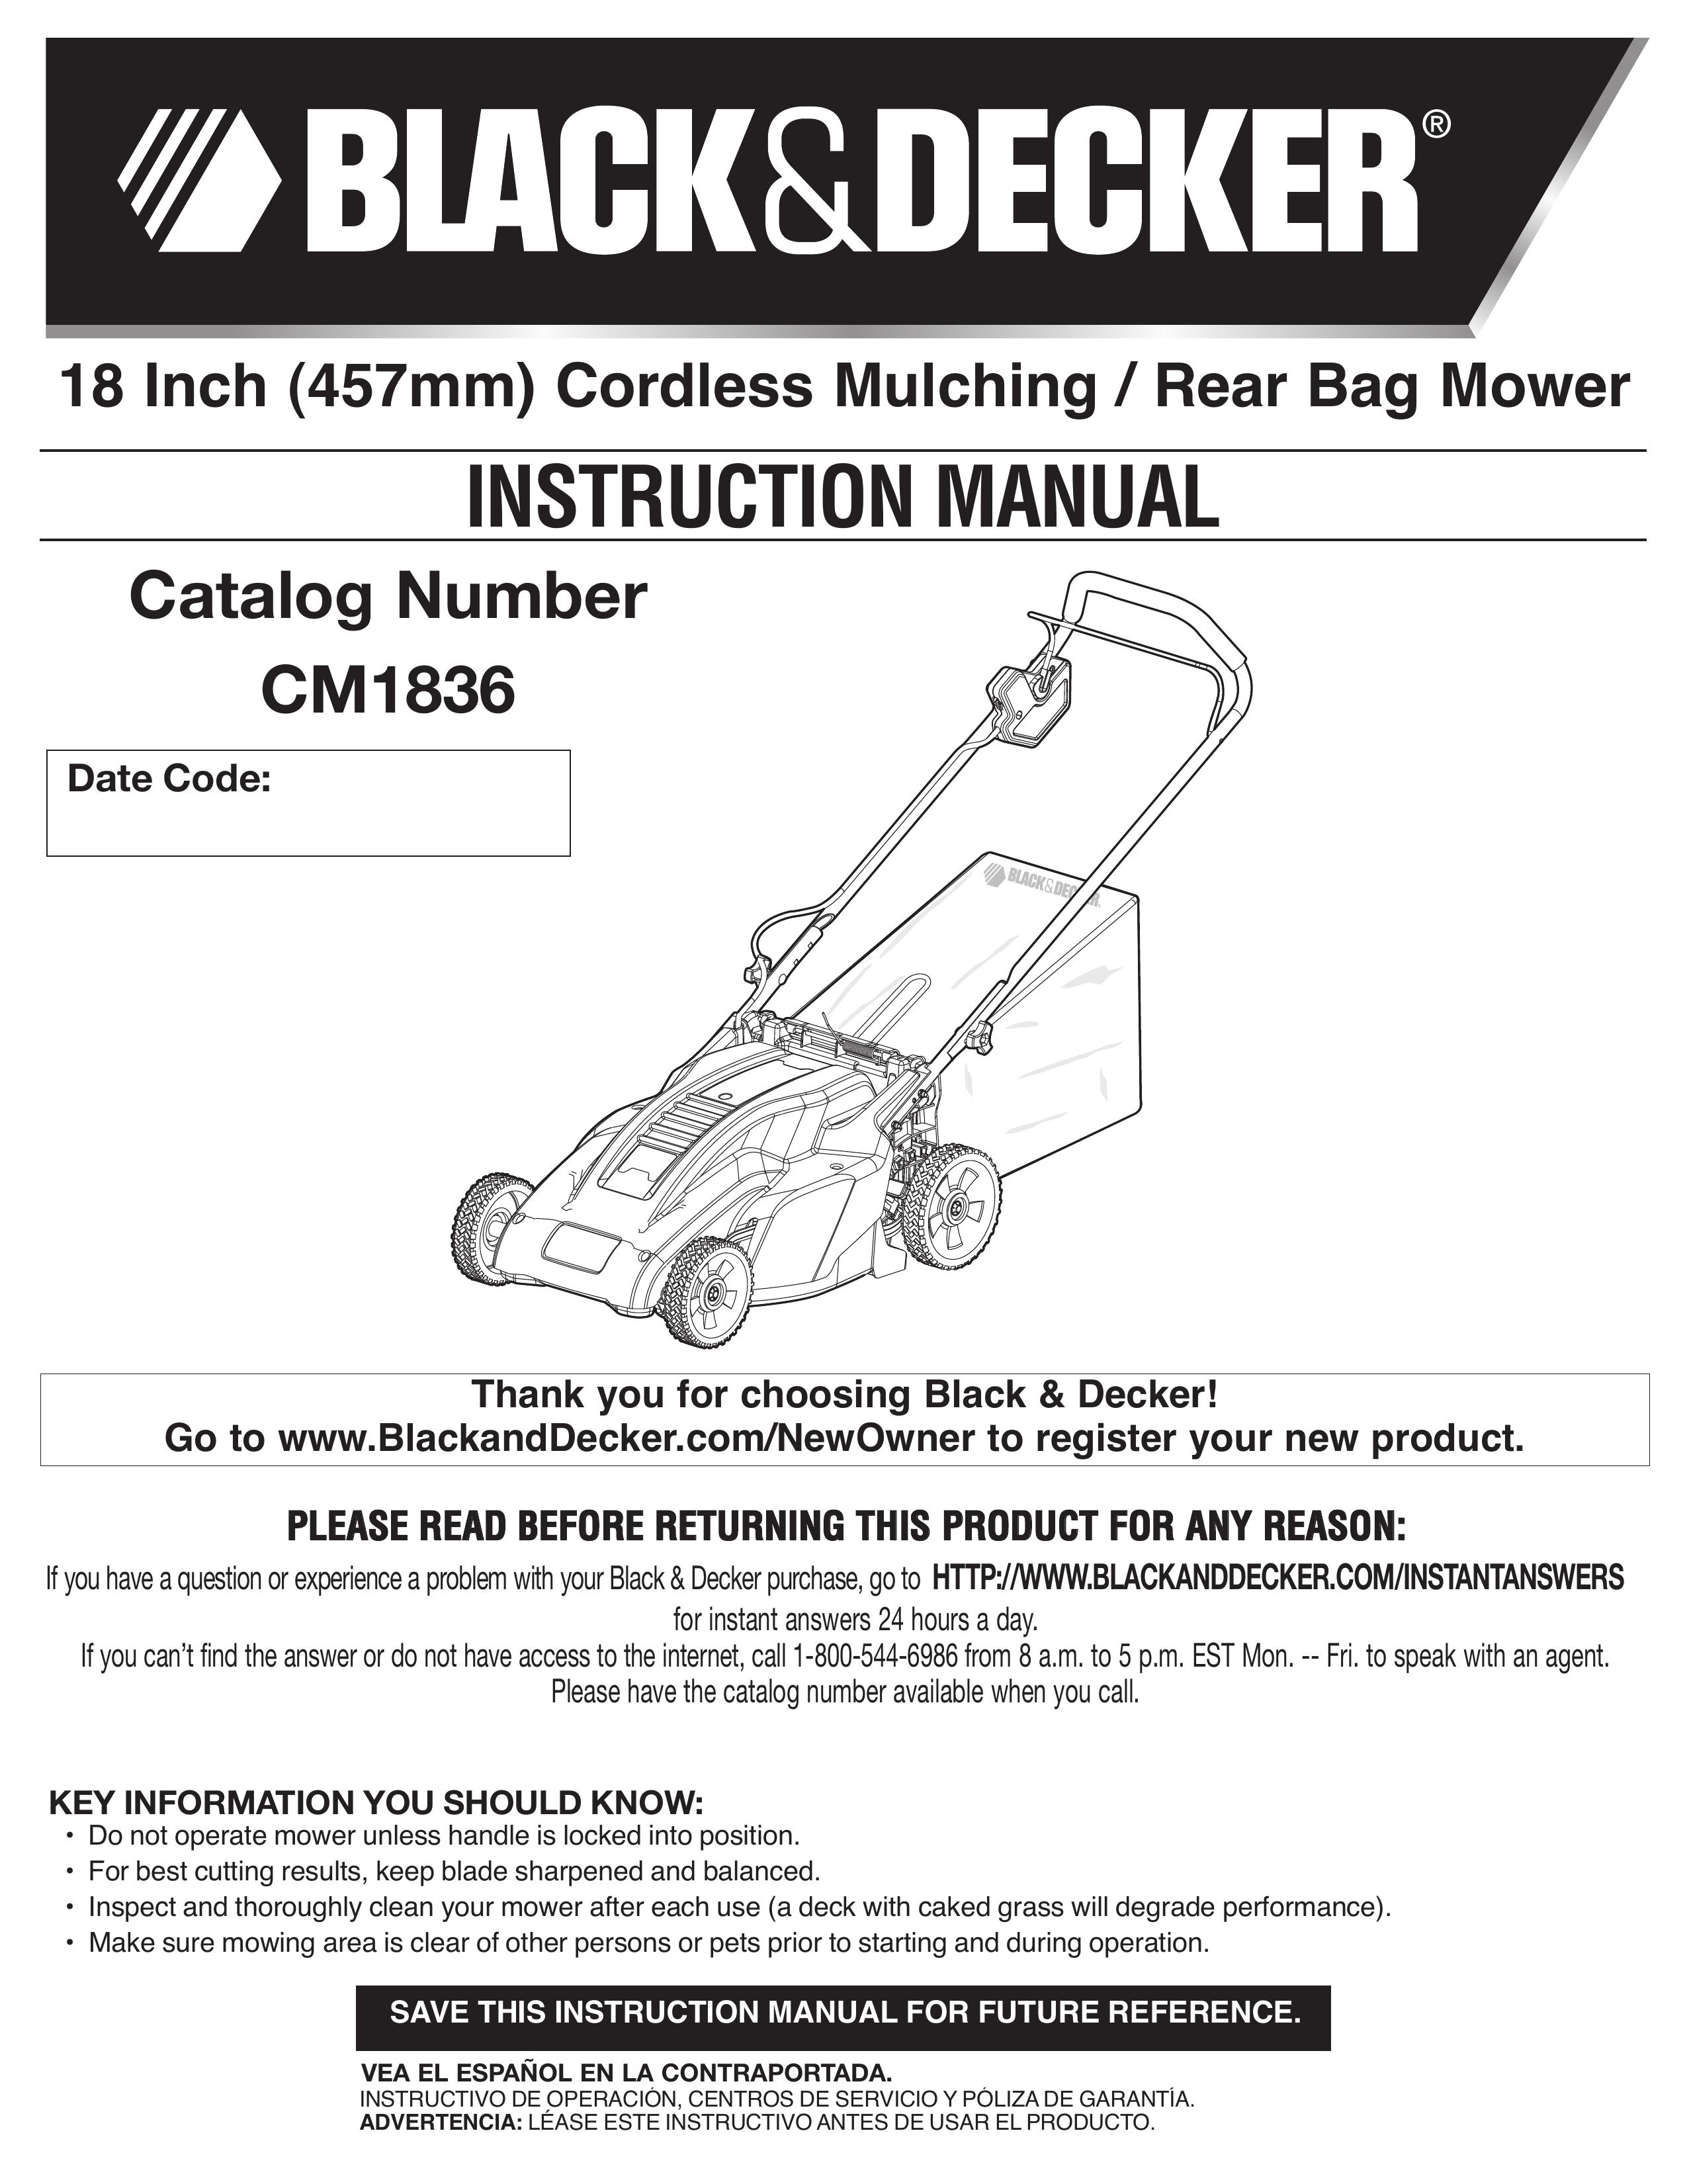 Black & Decker CM 1836 Lawn Mower User Manual